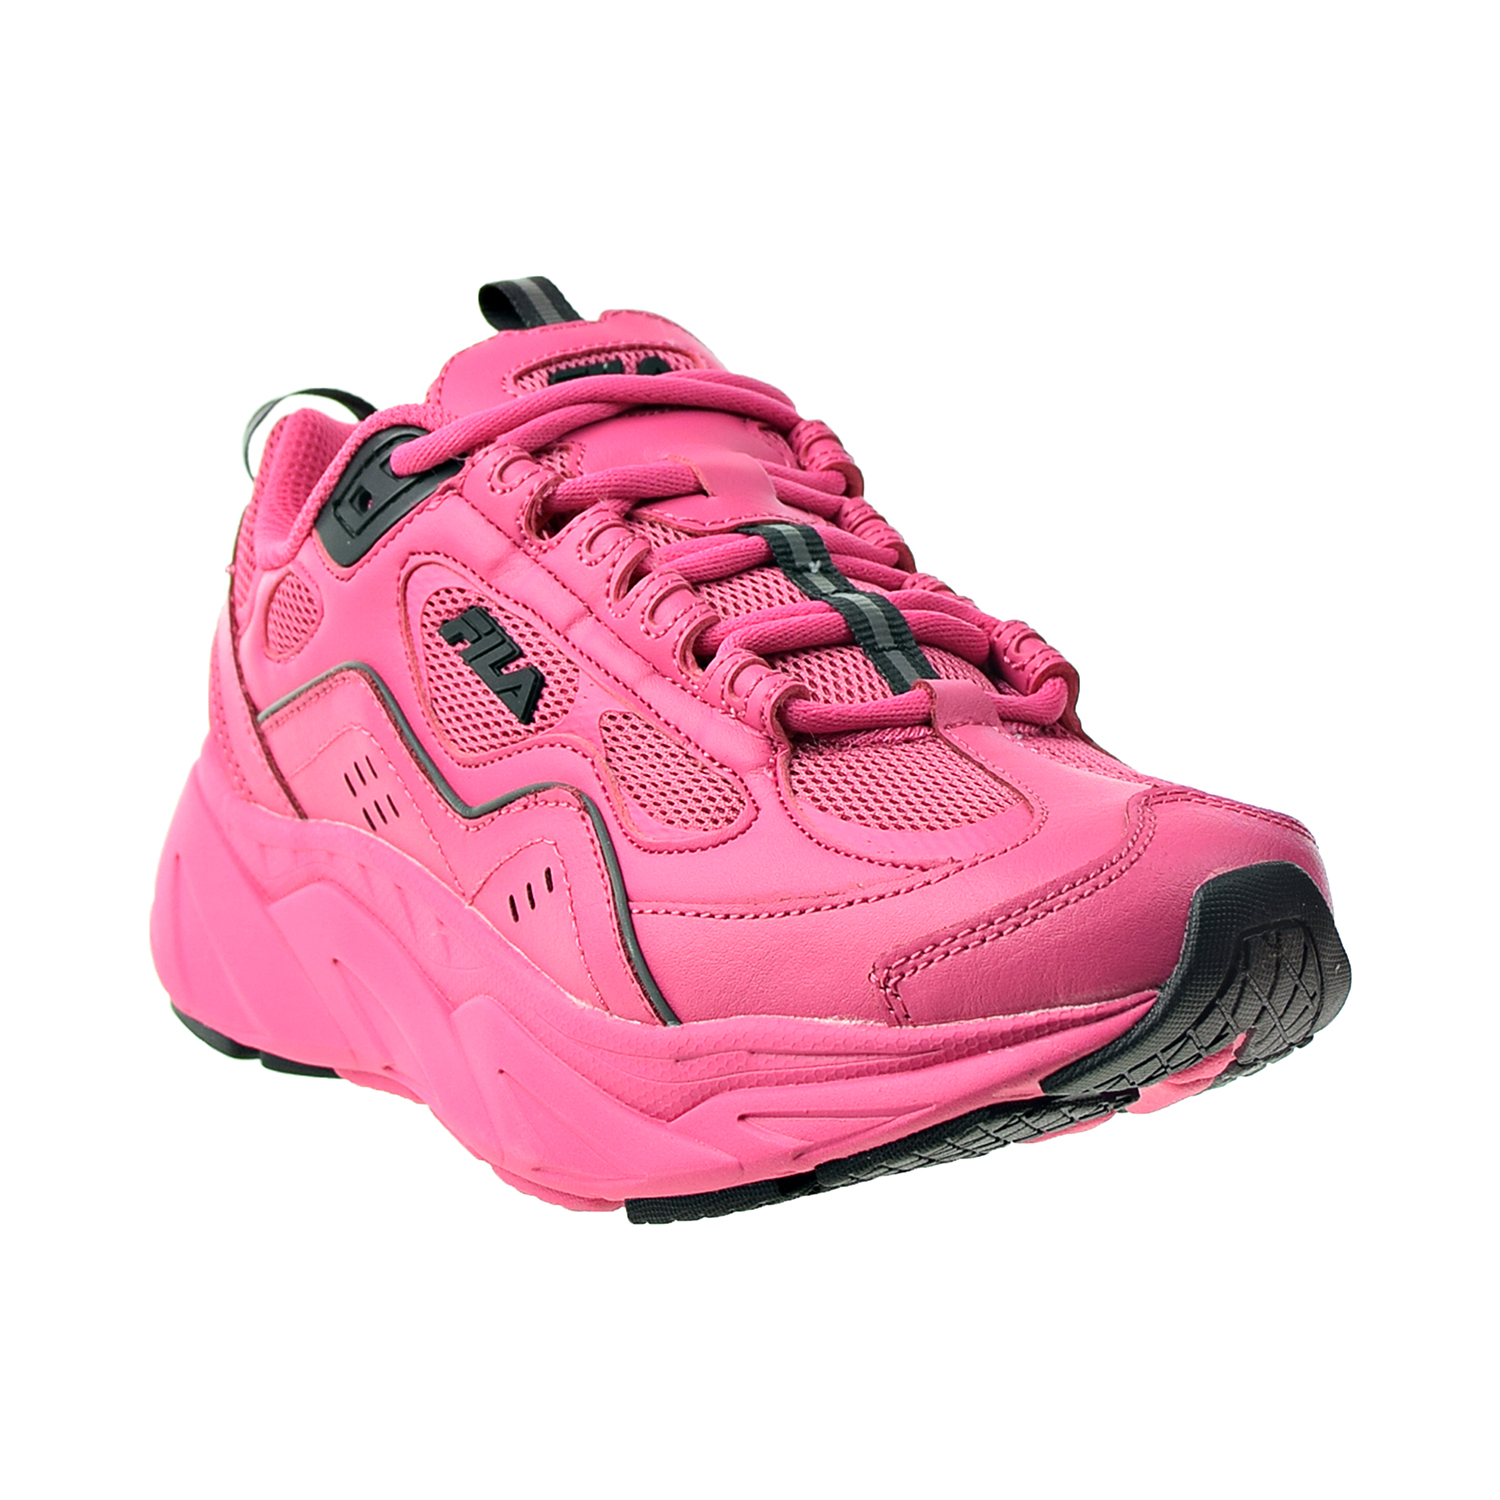 Fila Trigate Women's Shoes Shocking Pink-Metallic Silver 5rm01037-670